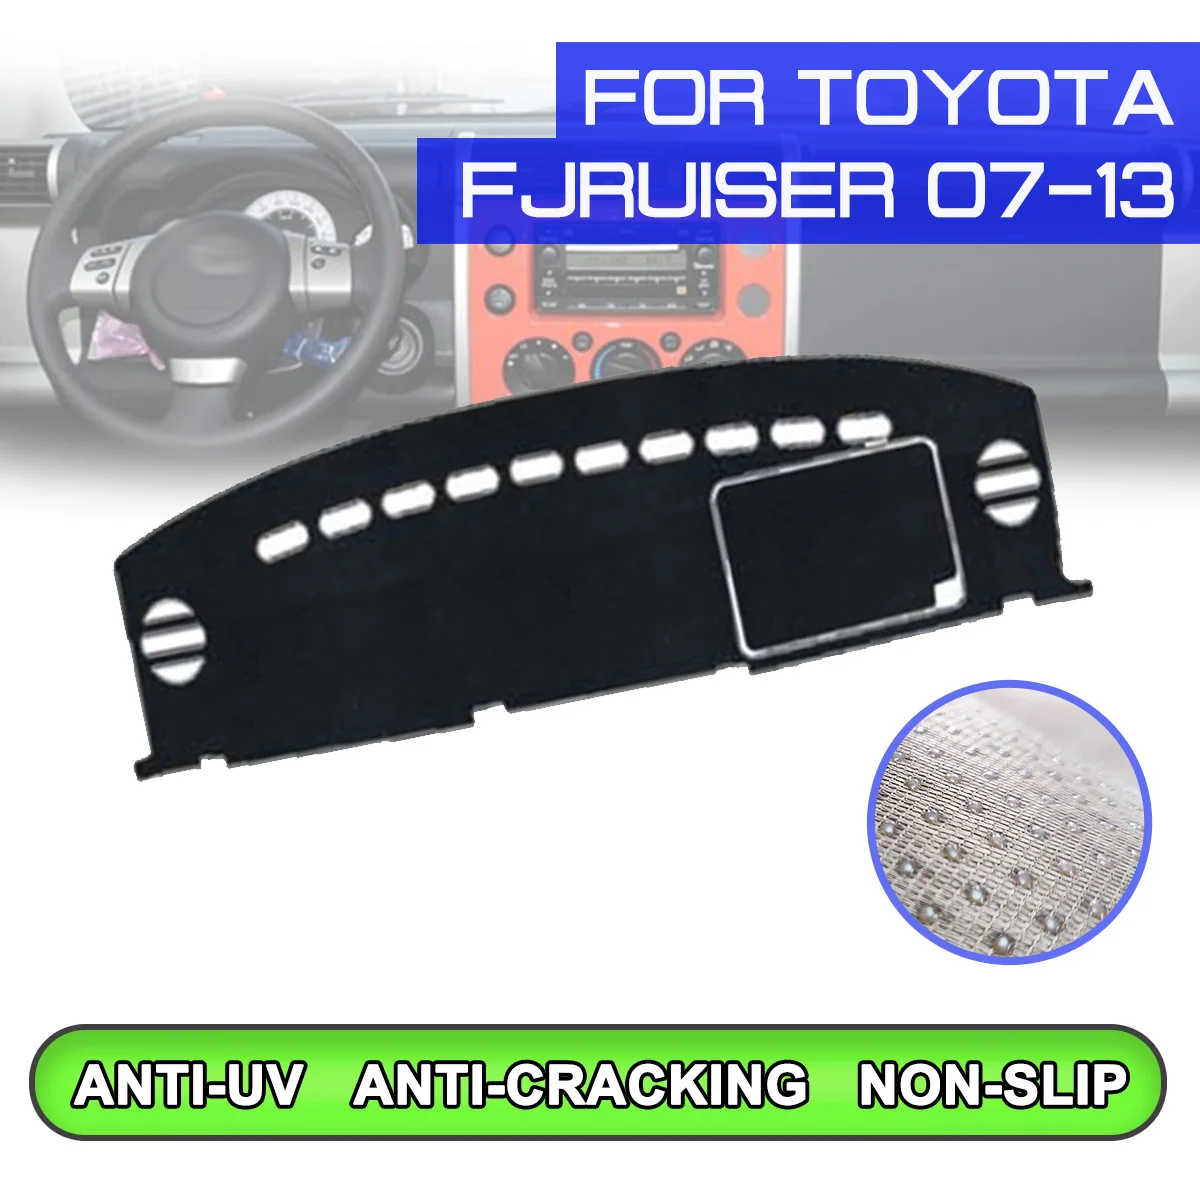 

Car Dashboard Mat Anti-dirty Non-slip Dash Cover Mat UV Protection Shade for Toyota FJ CRUISER 2007 2008 2009 2010 2011-2013